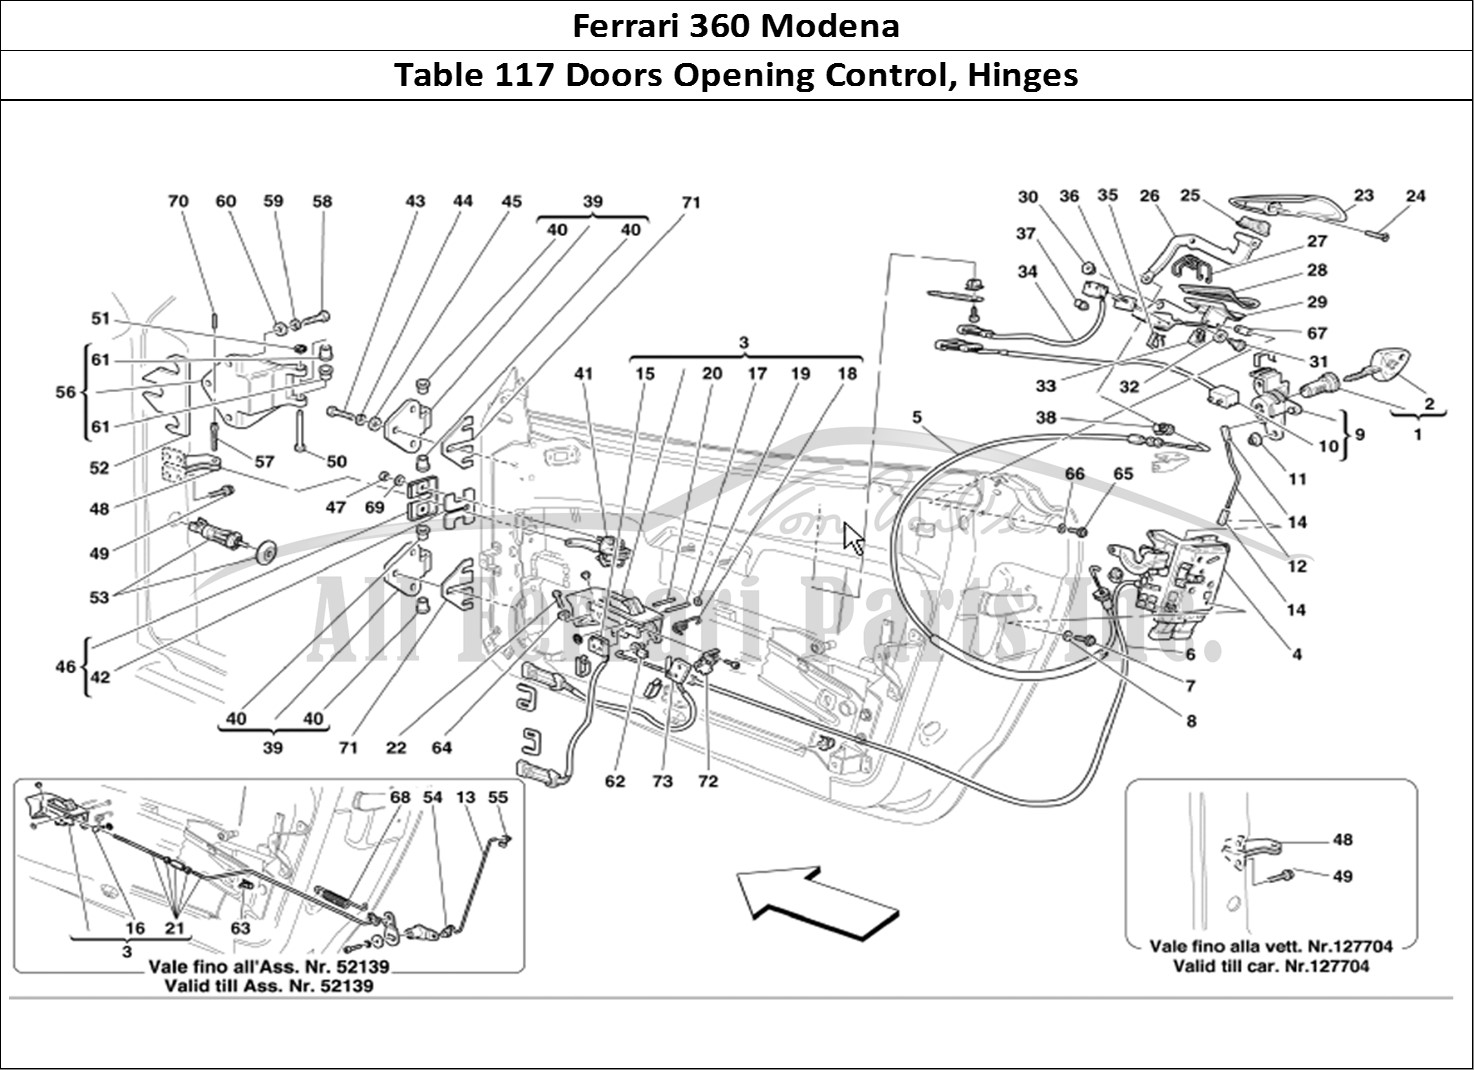 Buy Original Ferrari 360 Modena 117 Doors Opening Control